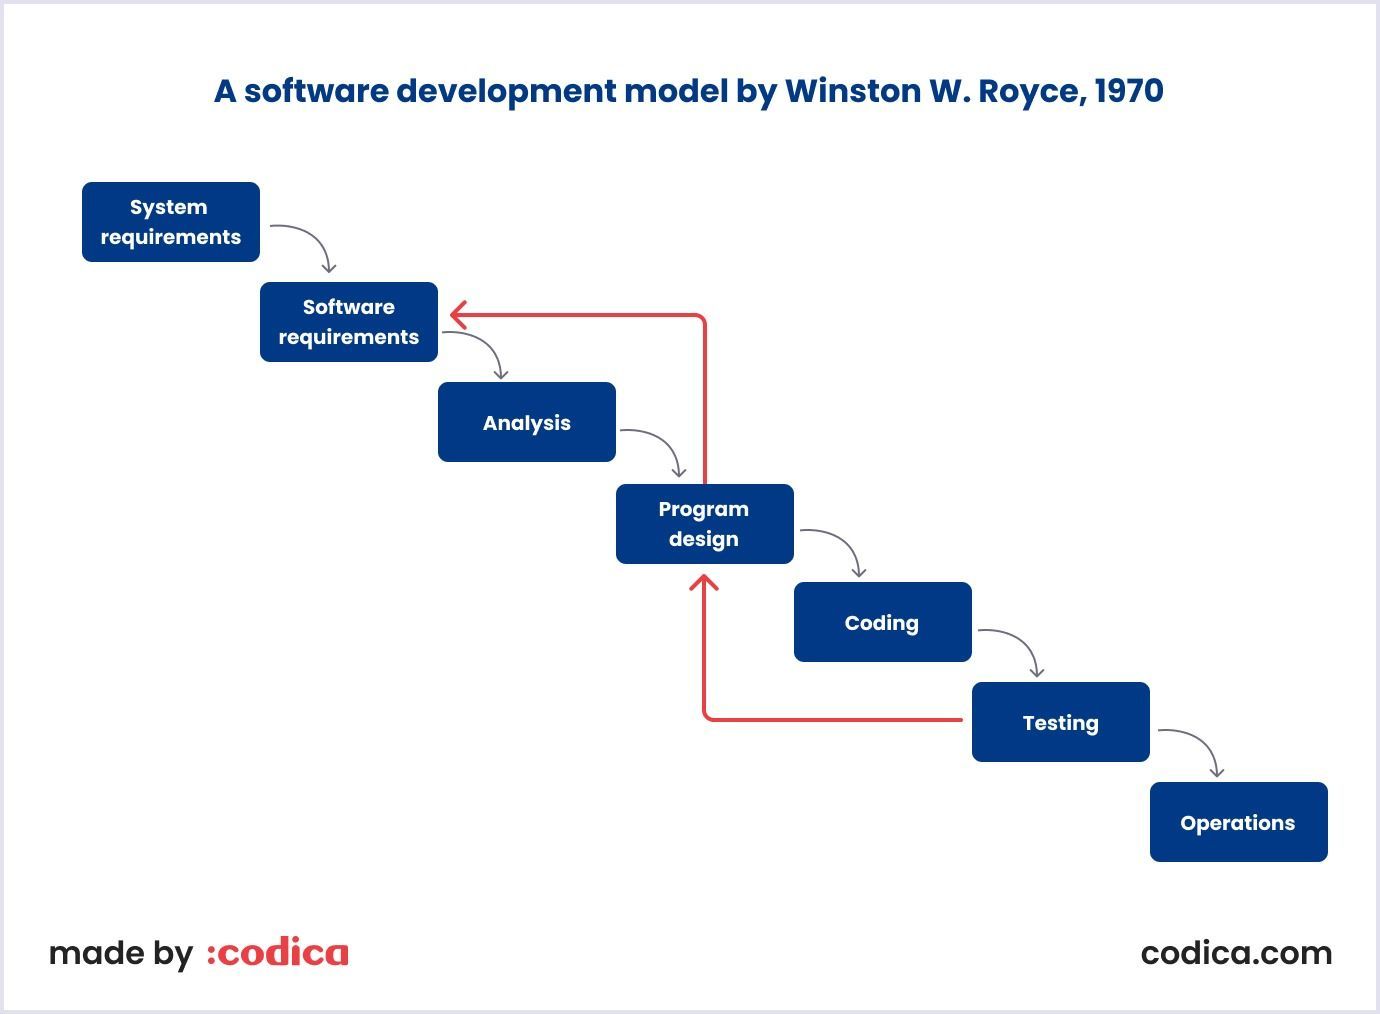 The waterfall software development model